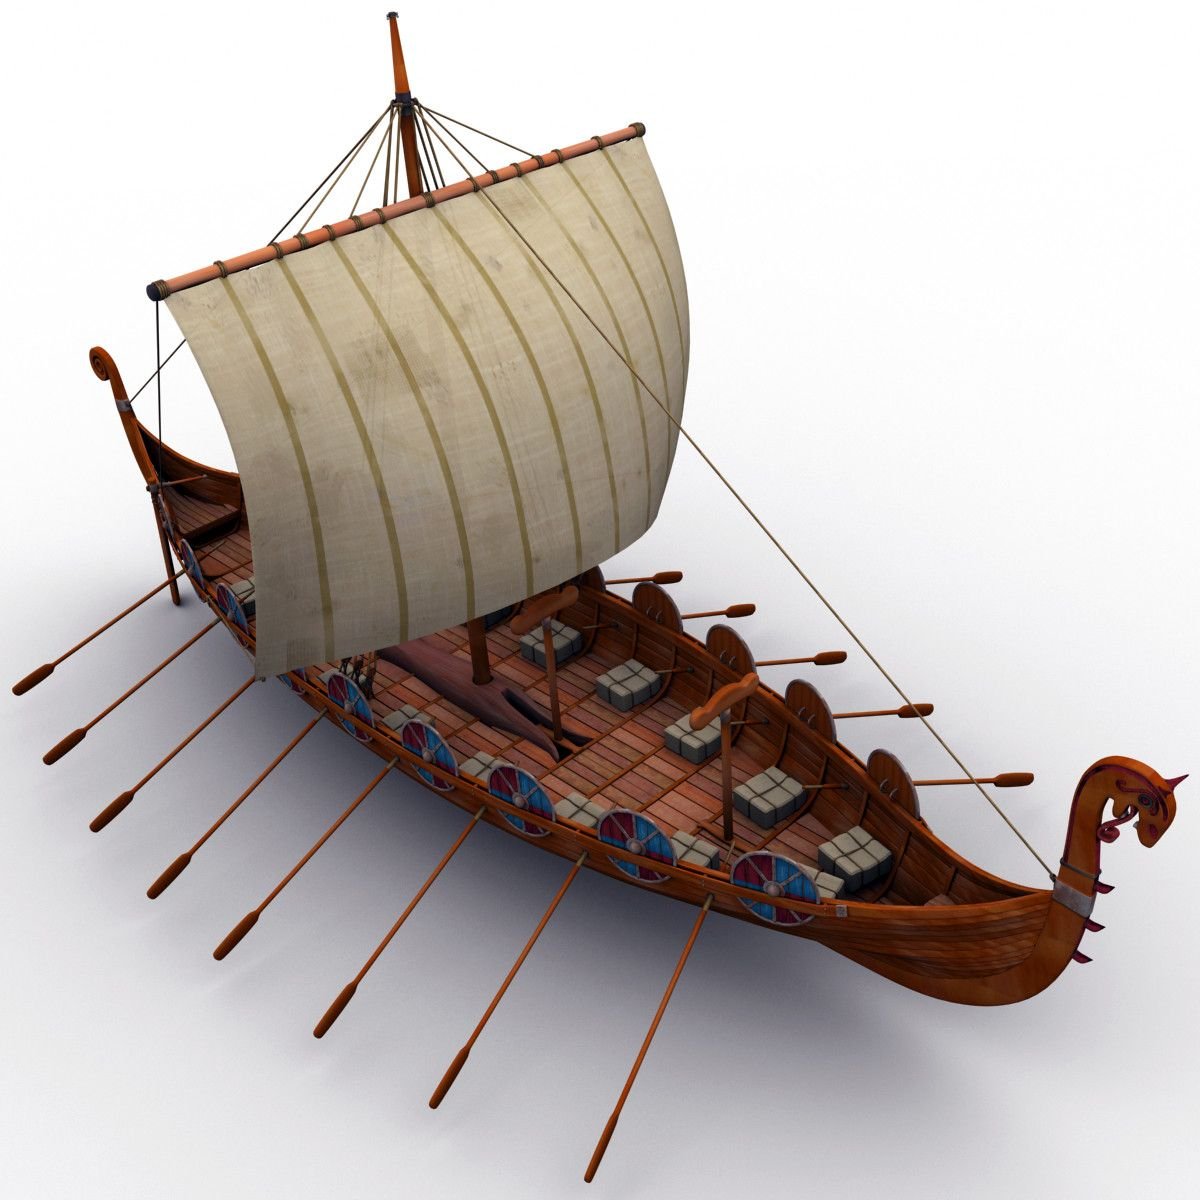 Название ладьи. Модель корабля Viking ship (корабль викингов). Корабль викингов Драккара. Дракар викингов модель. Ладья Драккар викингов.